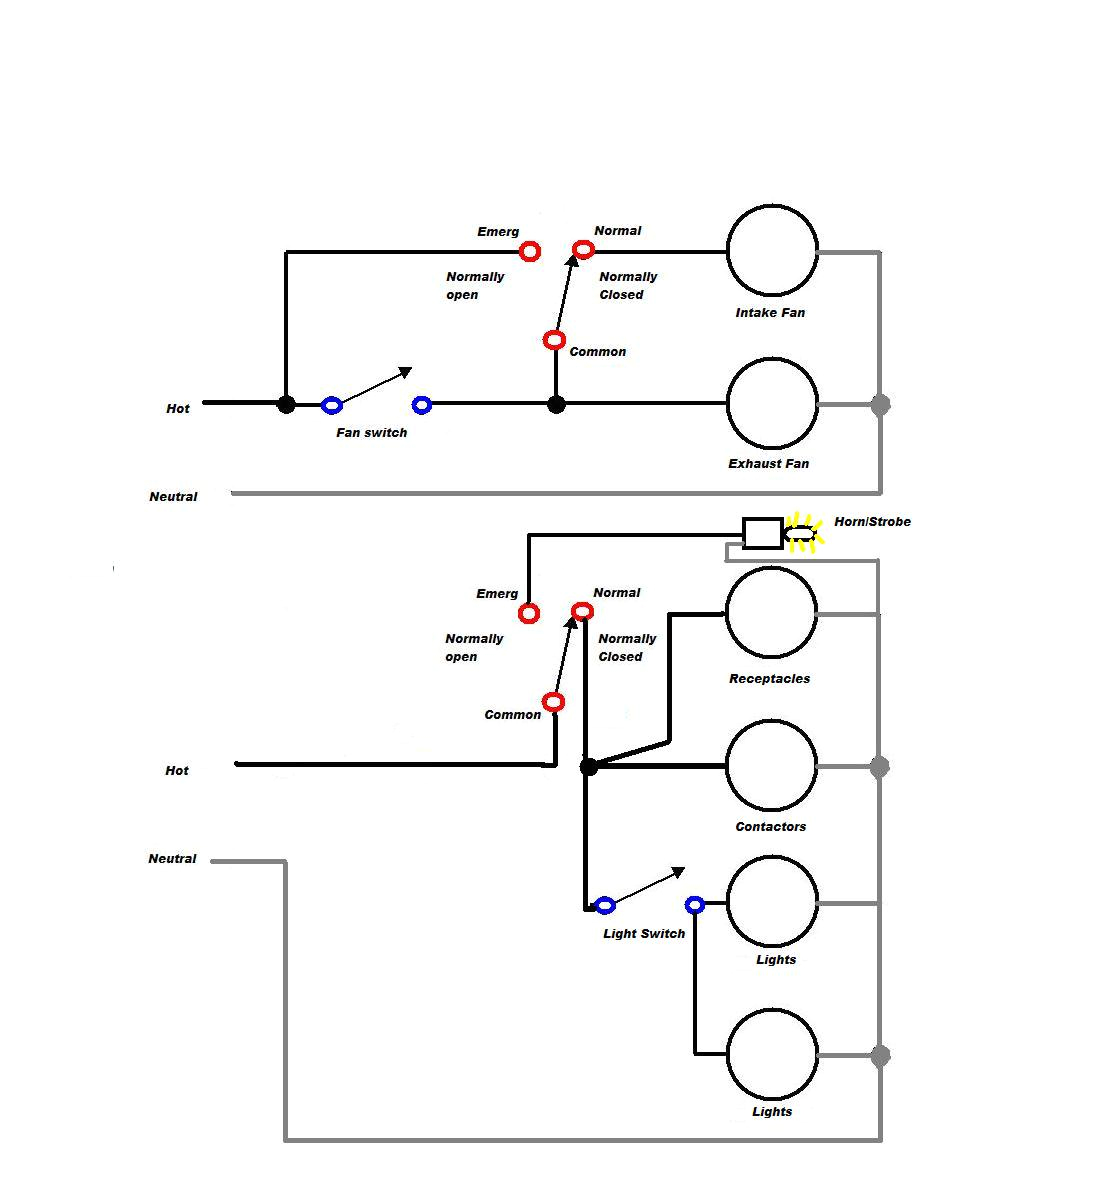 fire suppression wiring diagram wiring diagram userhood fire suppression wiring diagram wiring diagram centre fire suppression